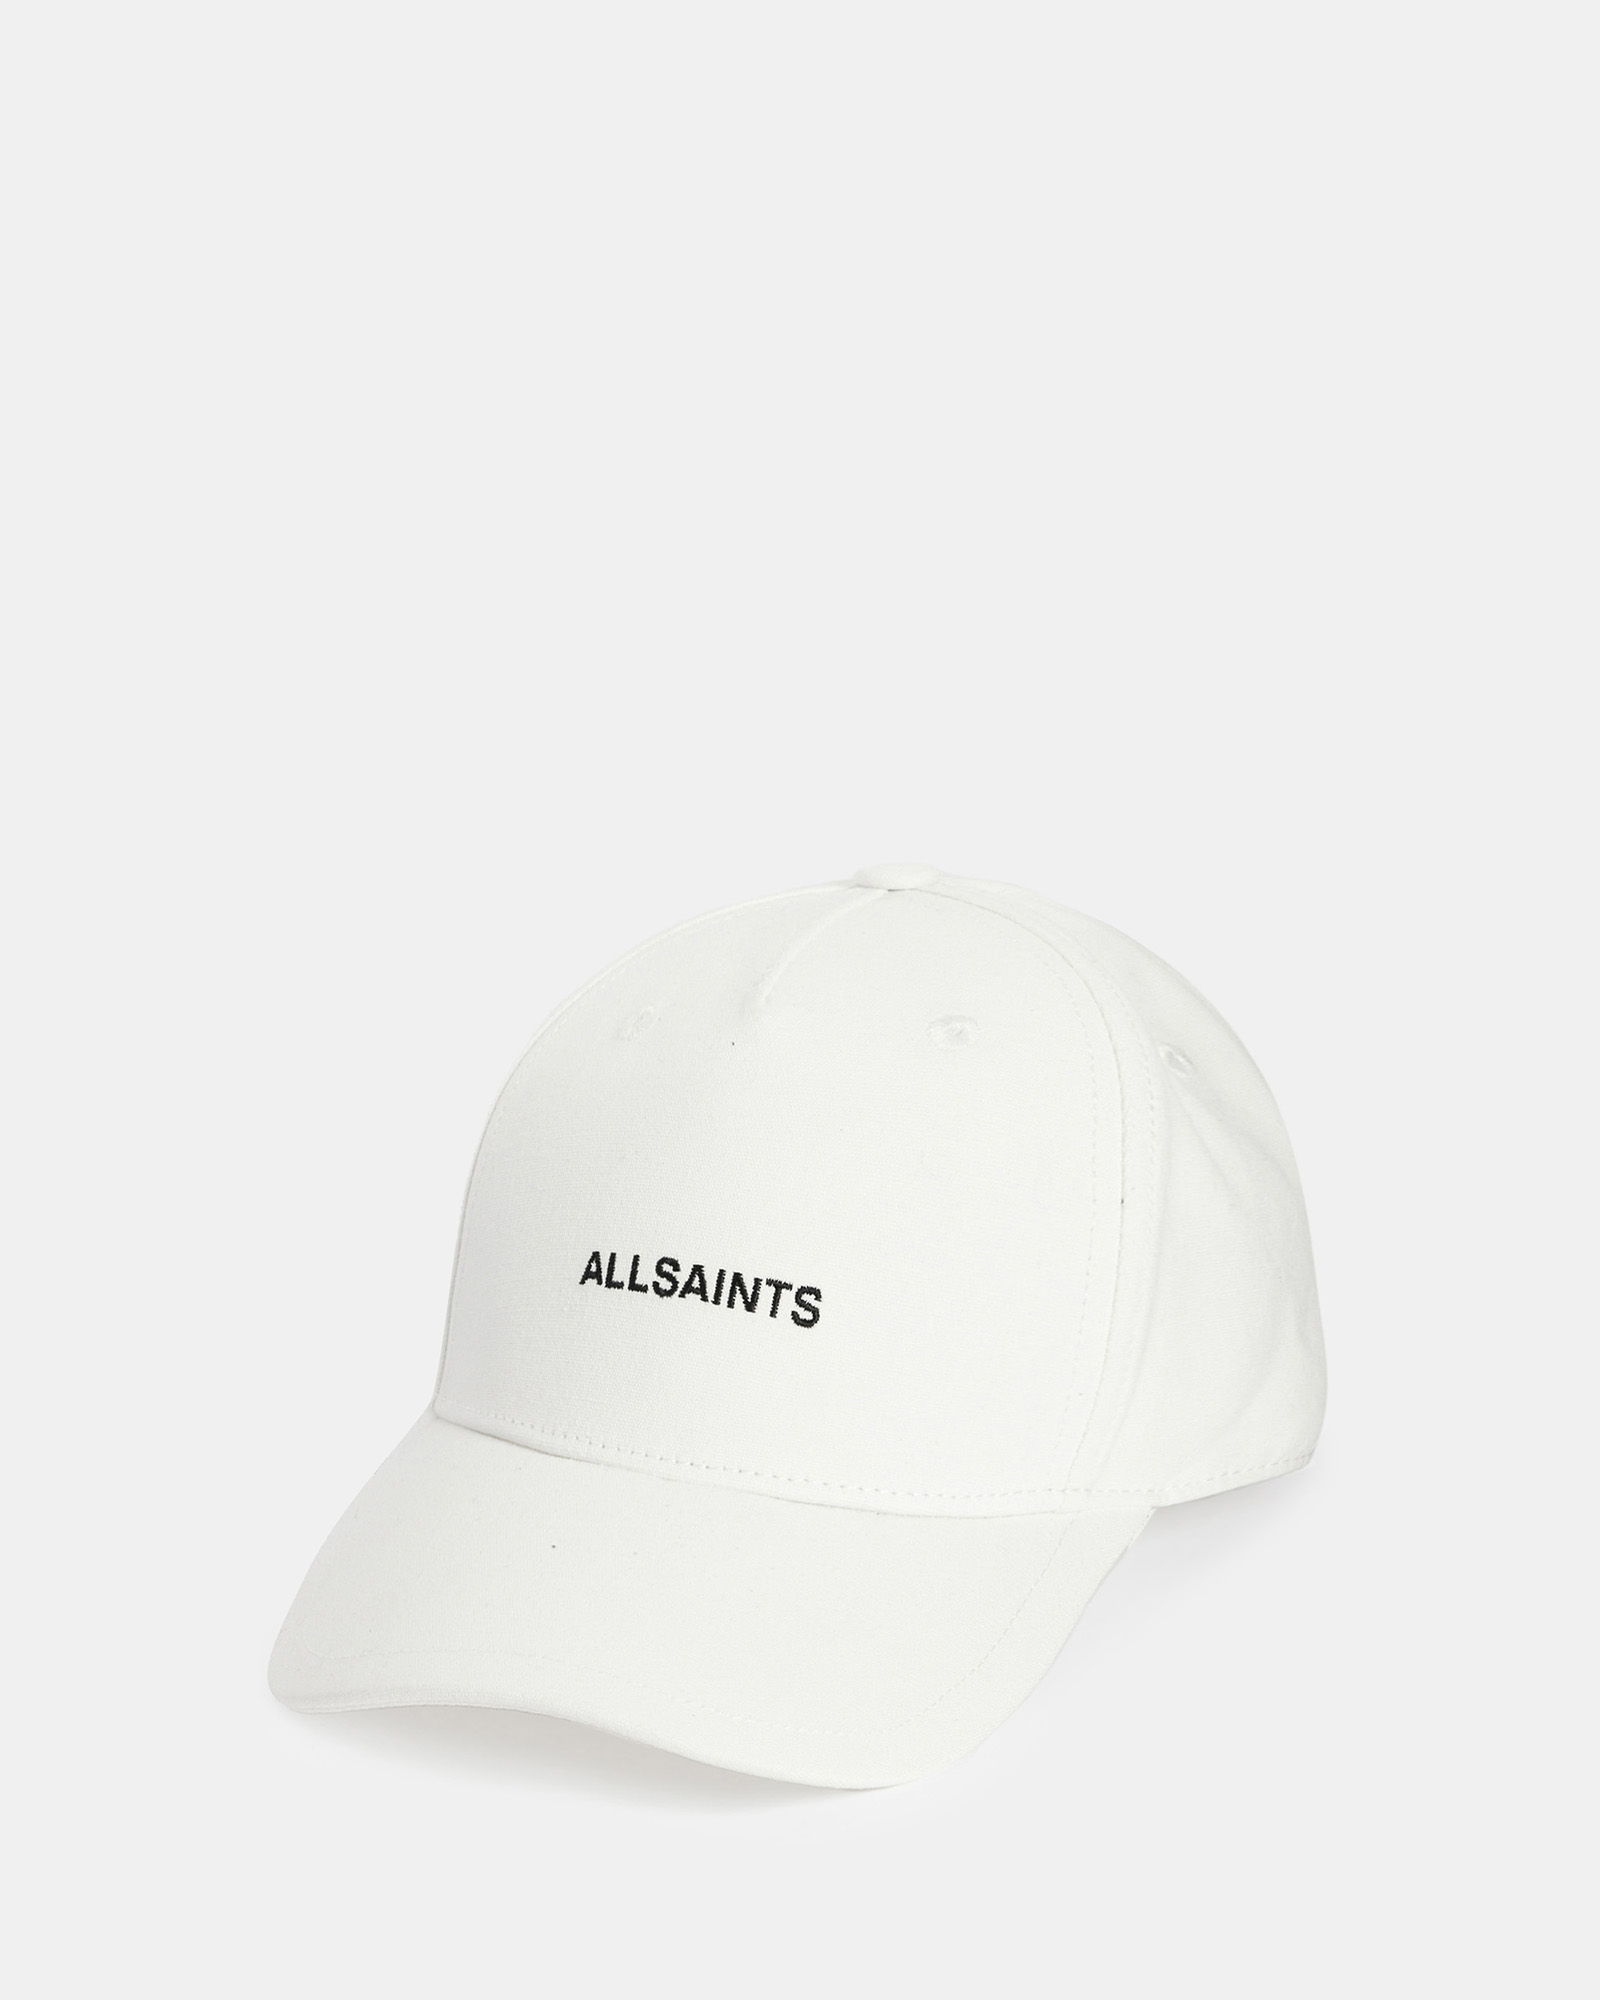 AllSaints London Baseball Cap,, White/Black